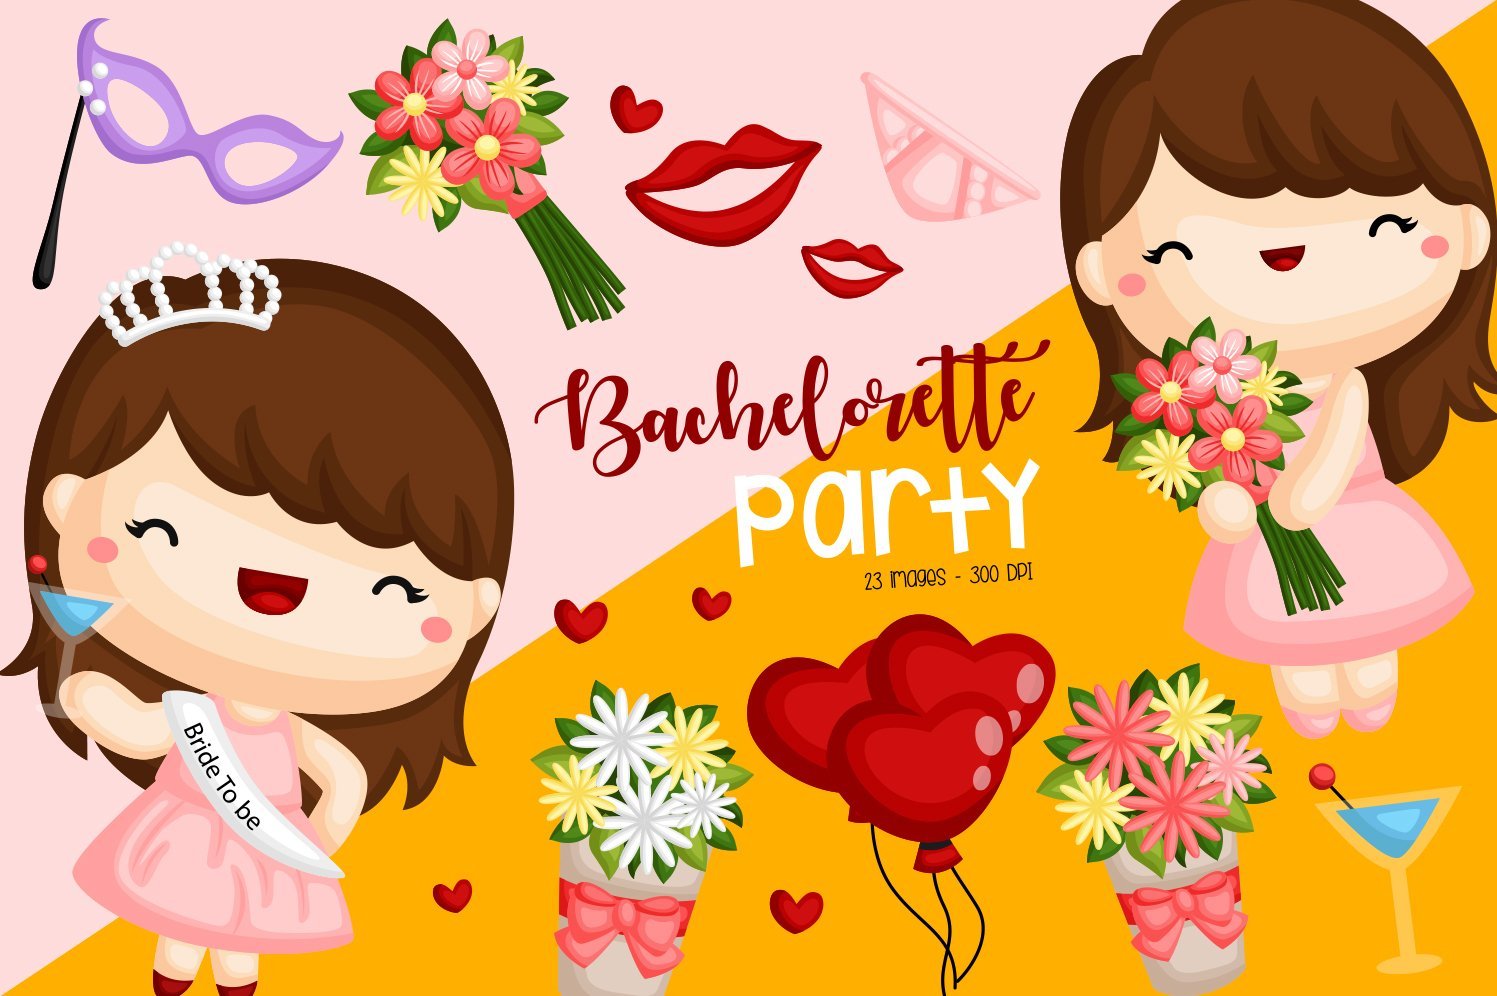 Bachelorette Party Bride Clipart cover image.